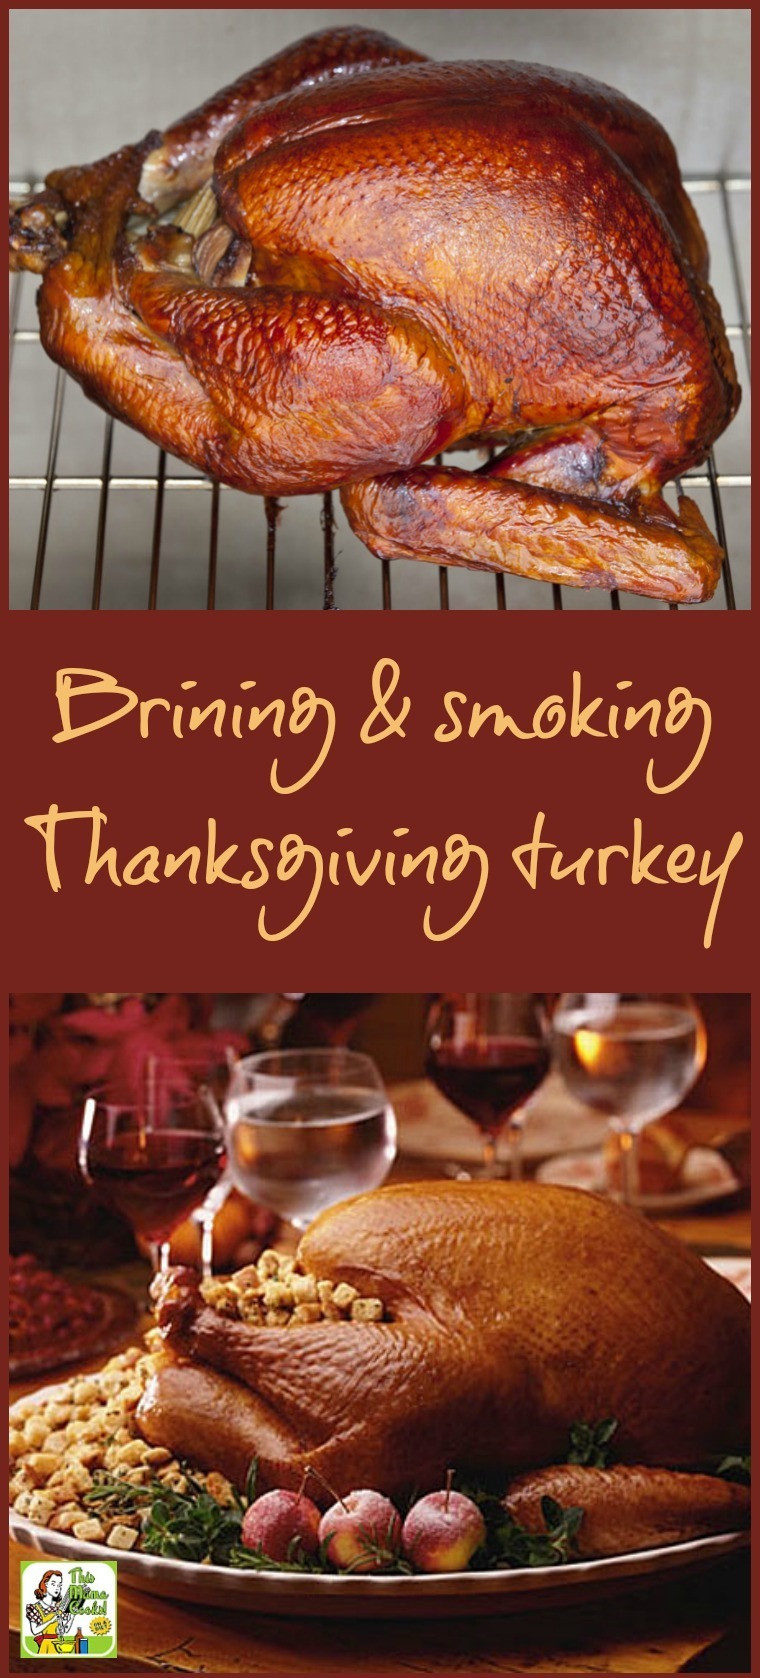 Turkey Brining Recipes Thanksgiving
 Brining and smoking your Thanksgiving turkey